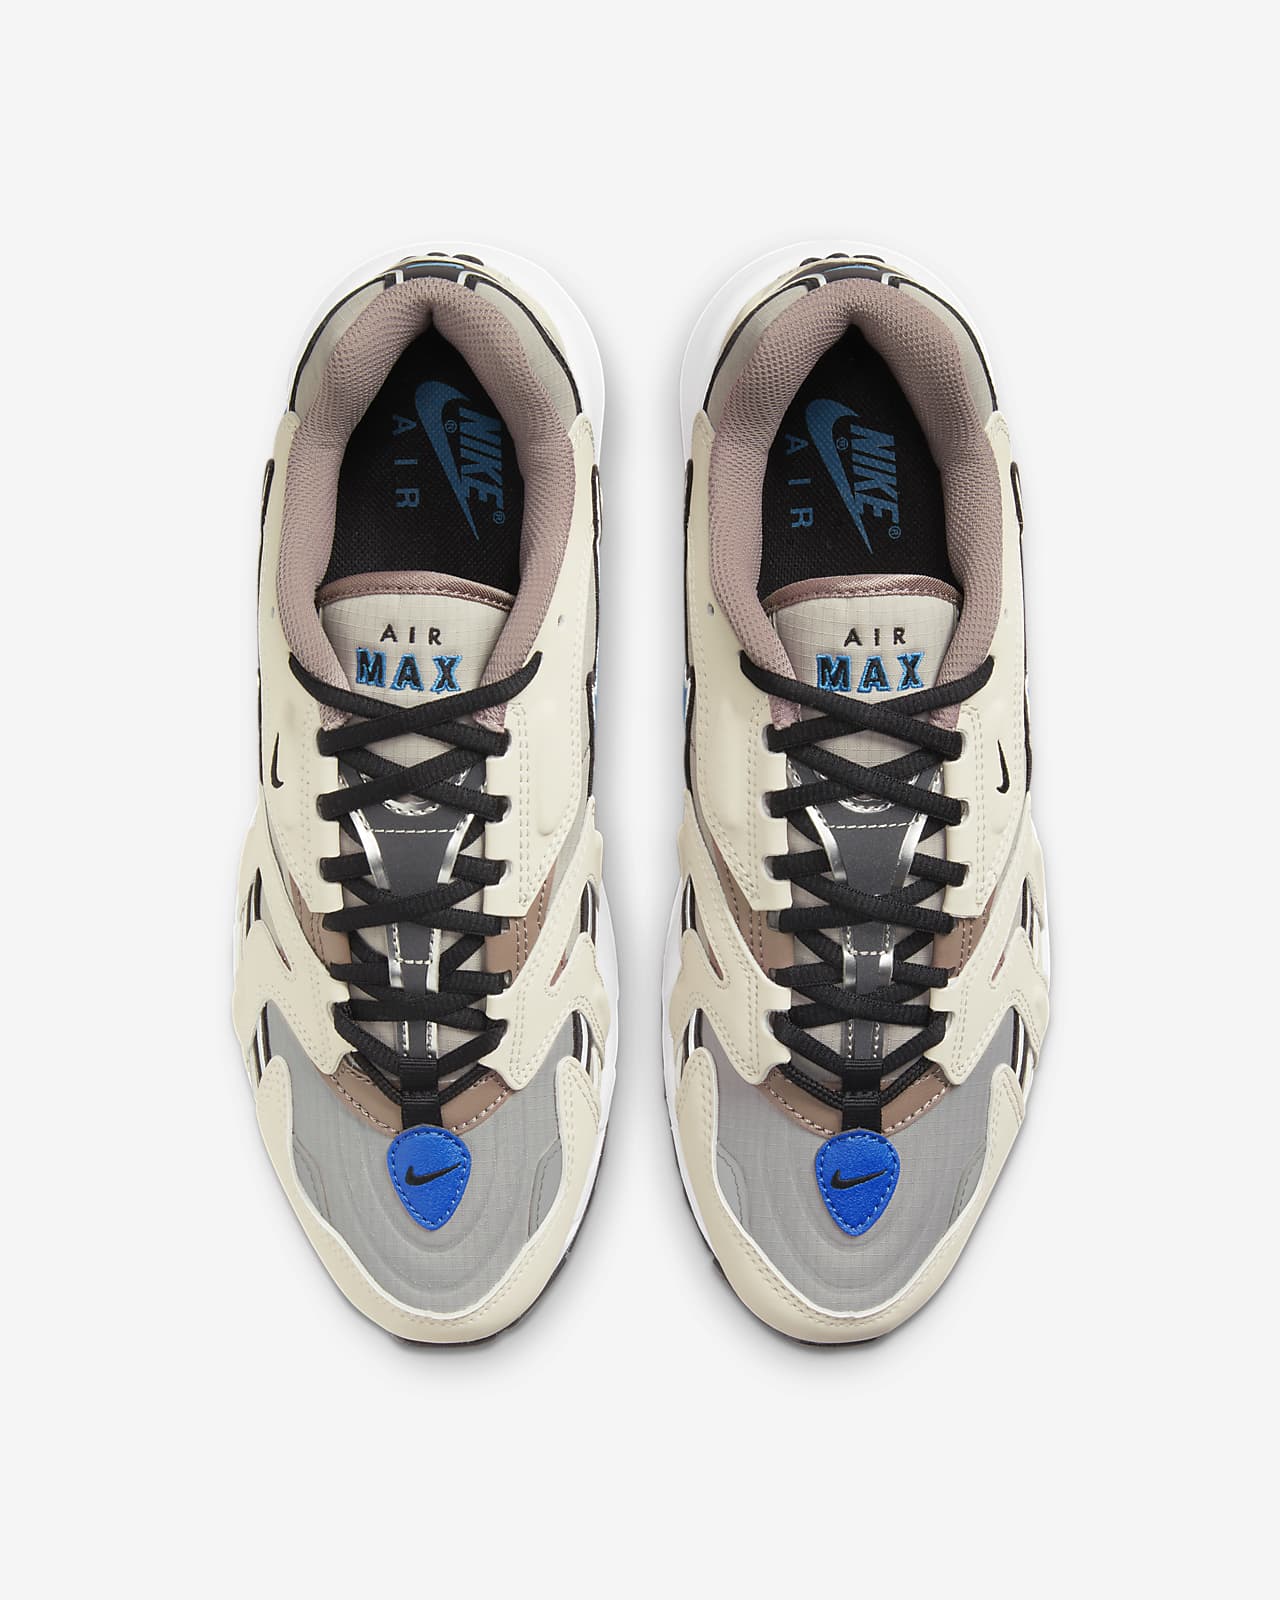 Nike Air Max 96 II Men's Shoes صبغة لاكمي ازرق